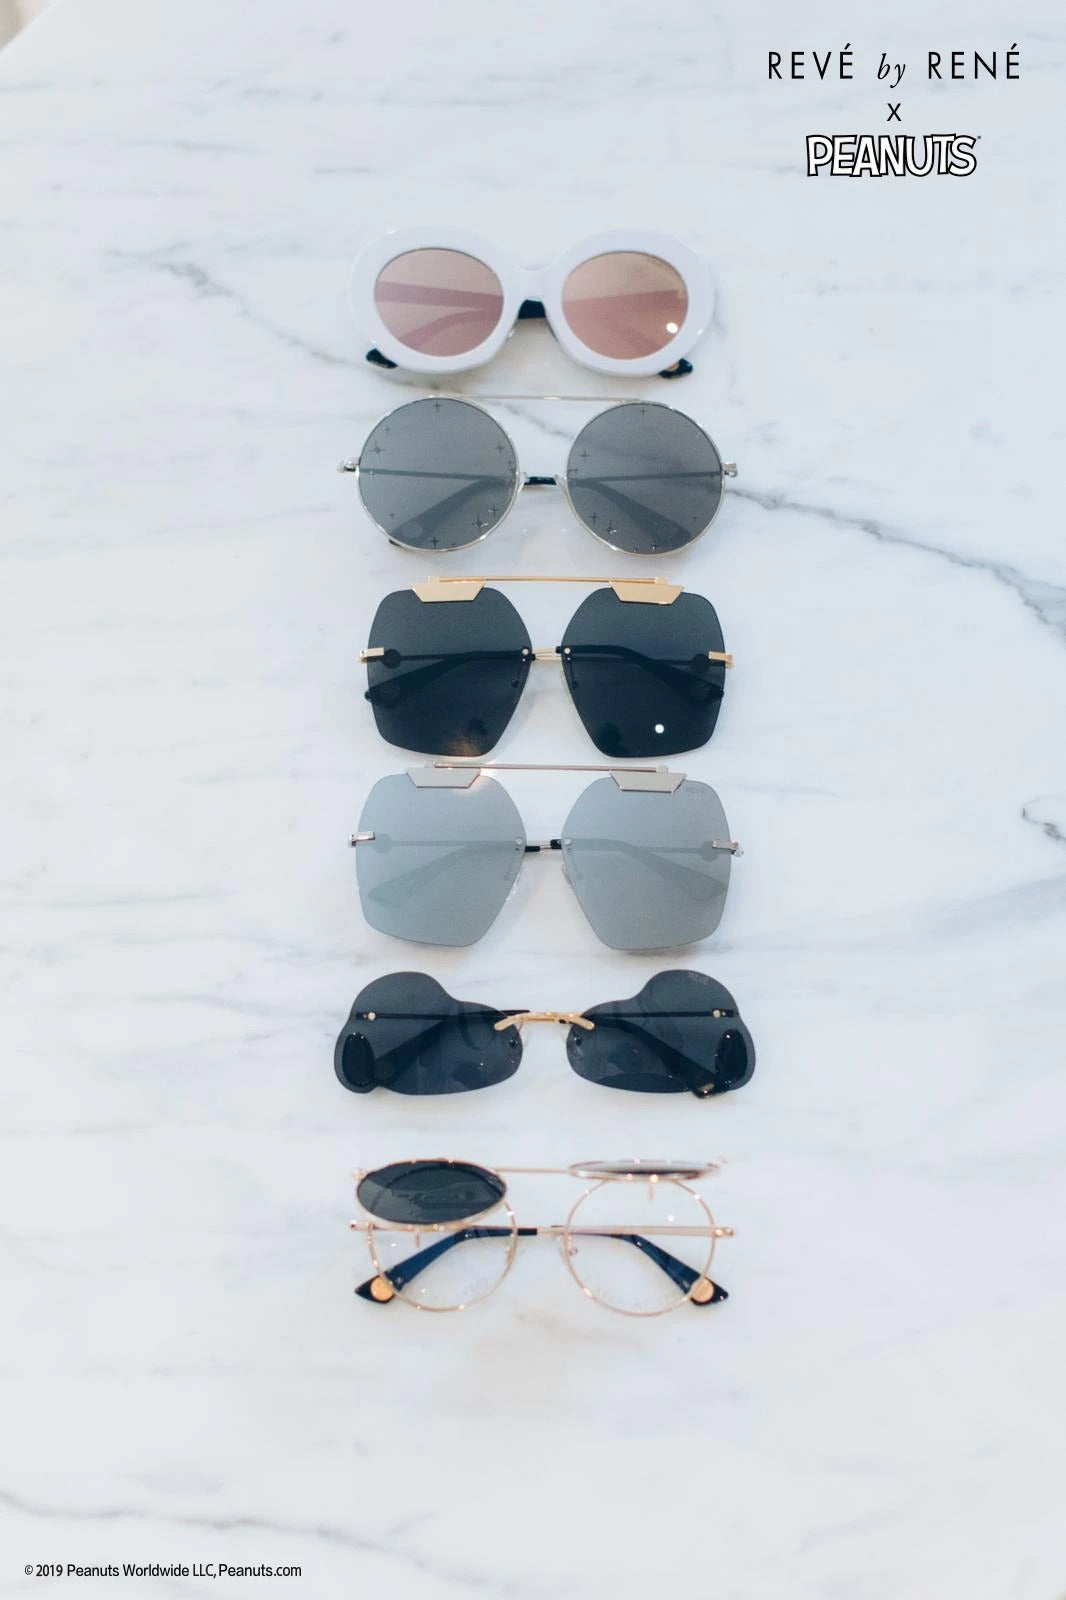 Revé by René x PEANUTS limited edition designer sunglasses 2019